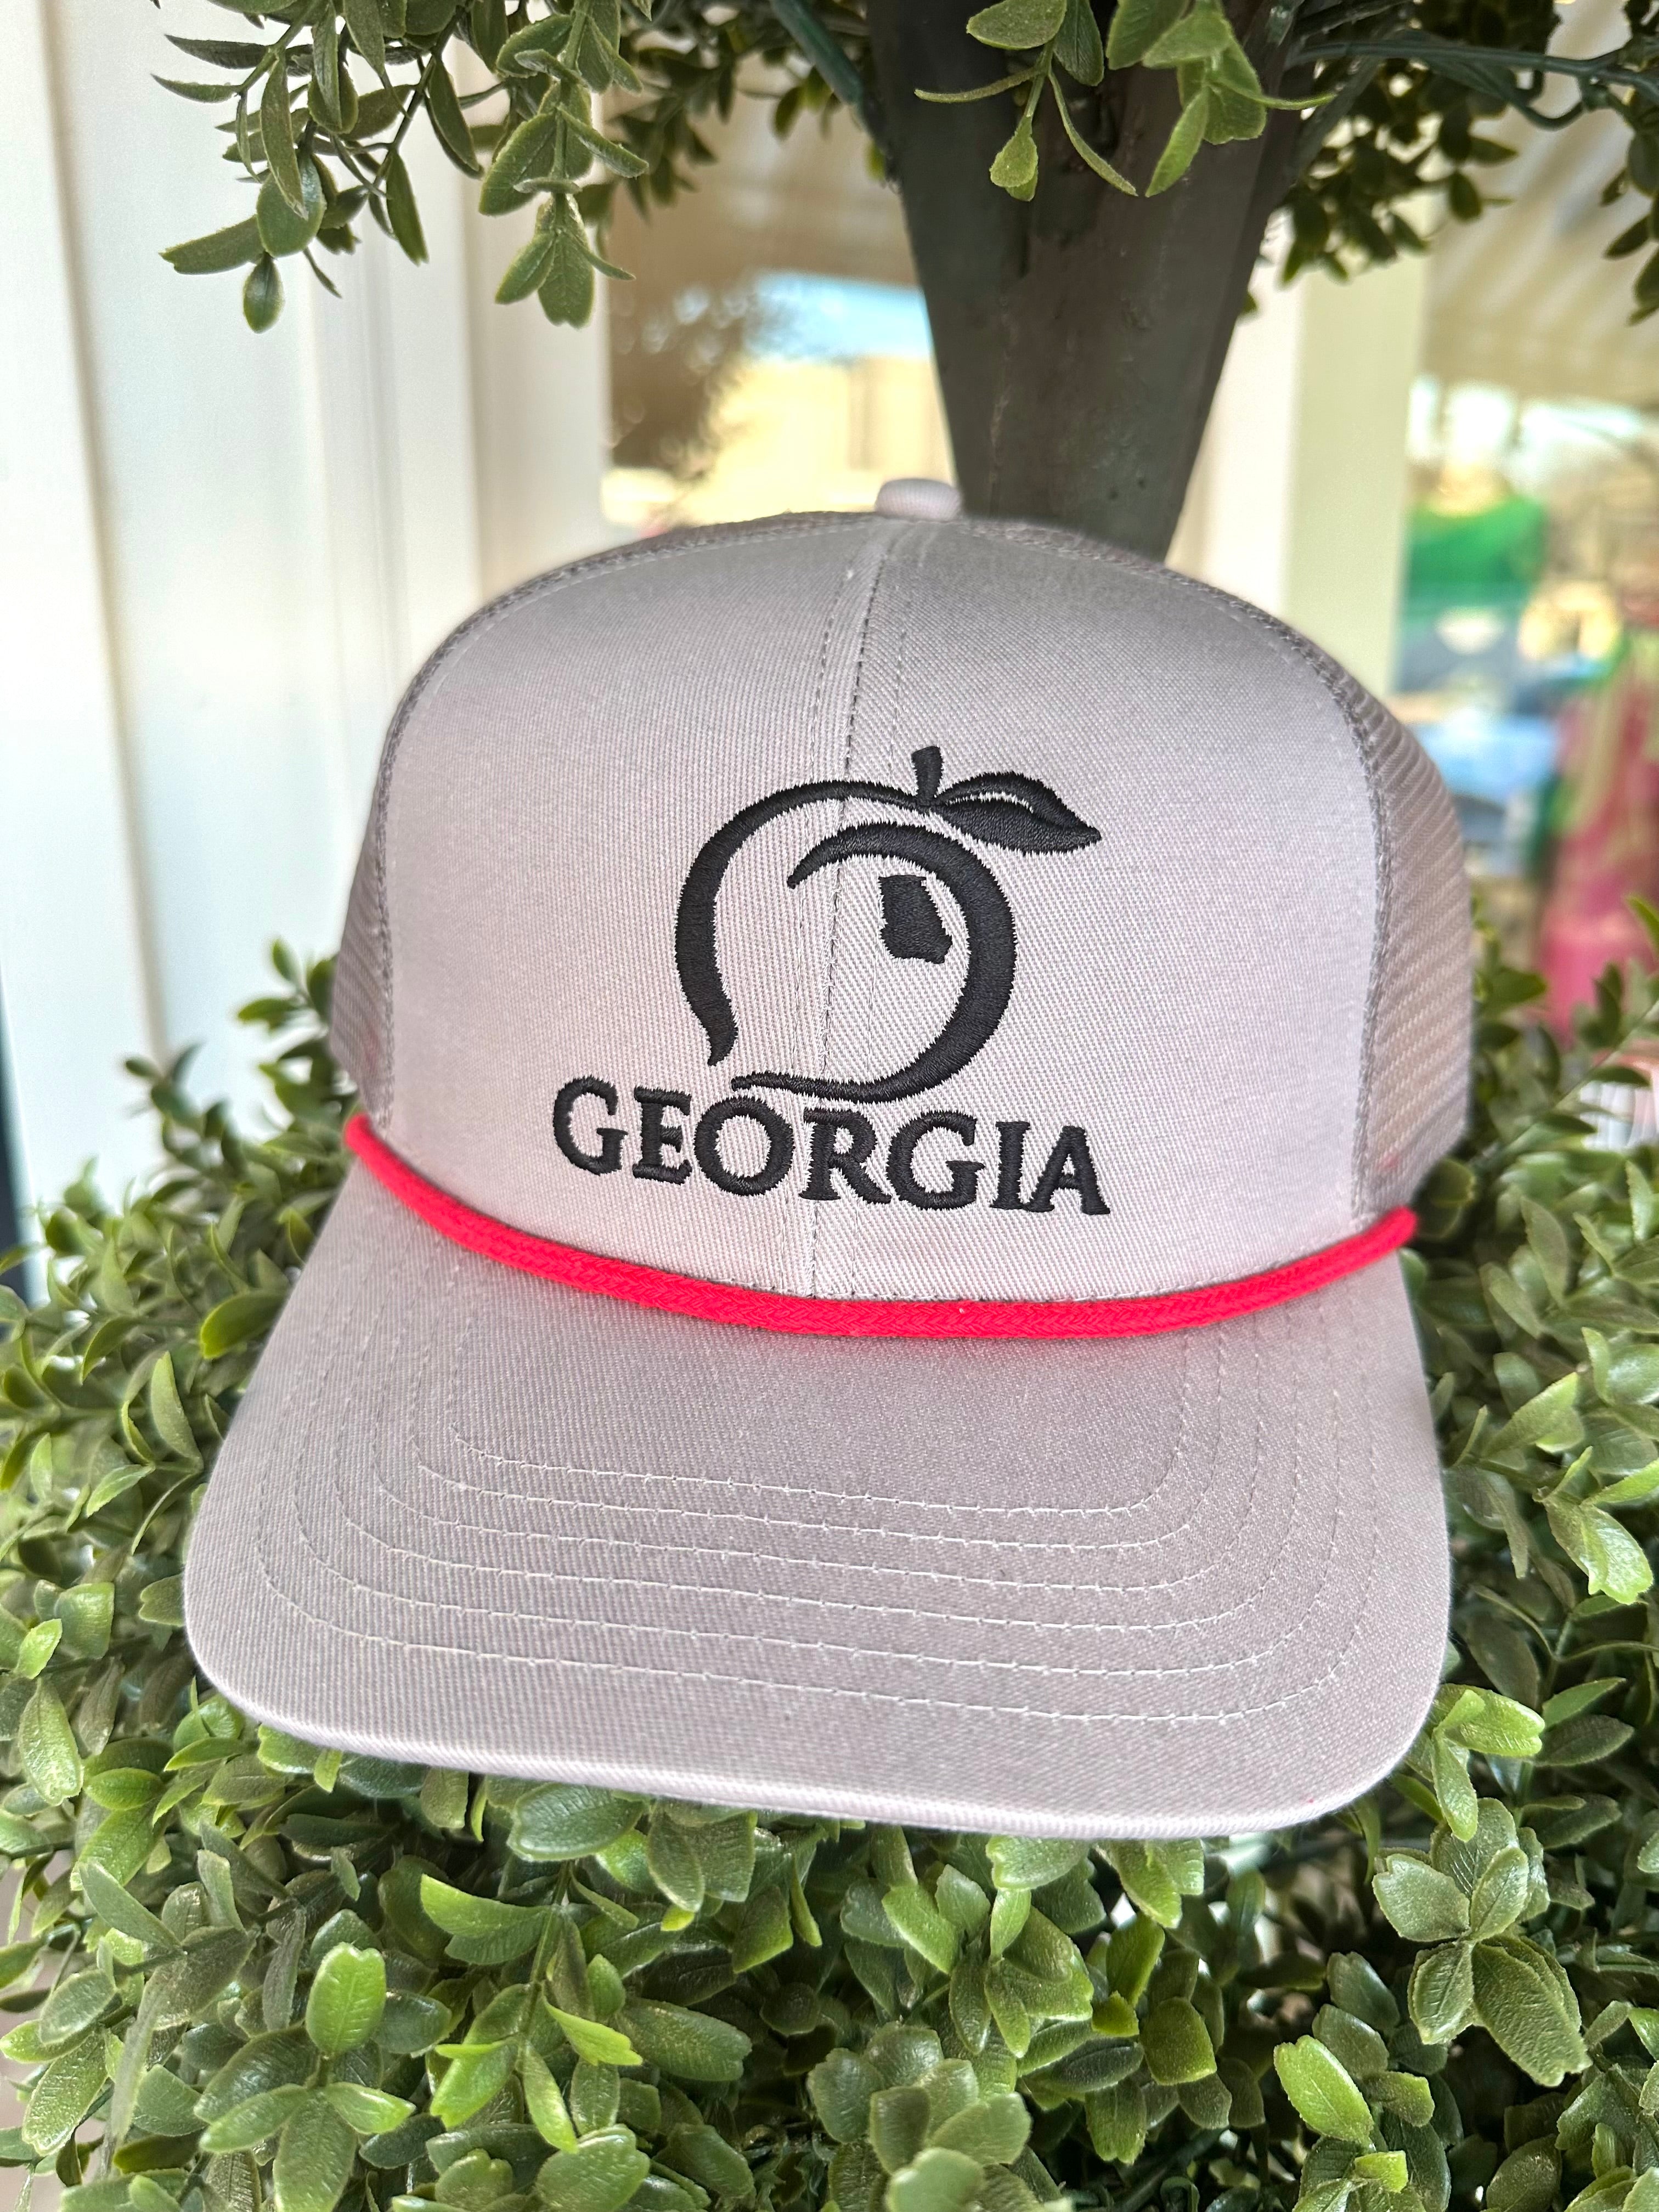 Original Georgia Trucker Rope Hat in Gray by Peach State Pride